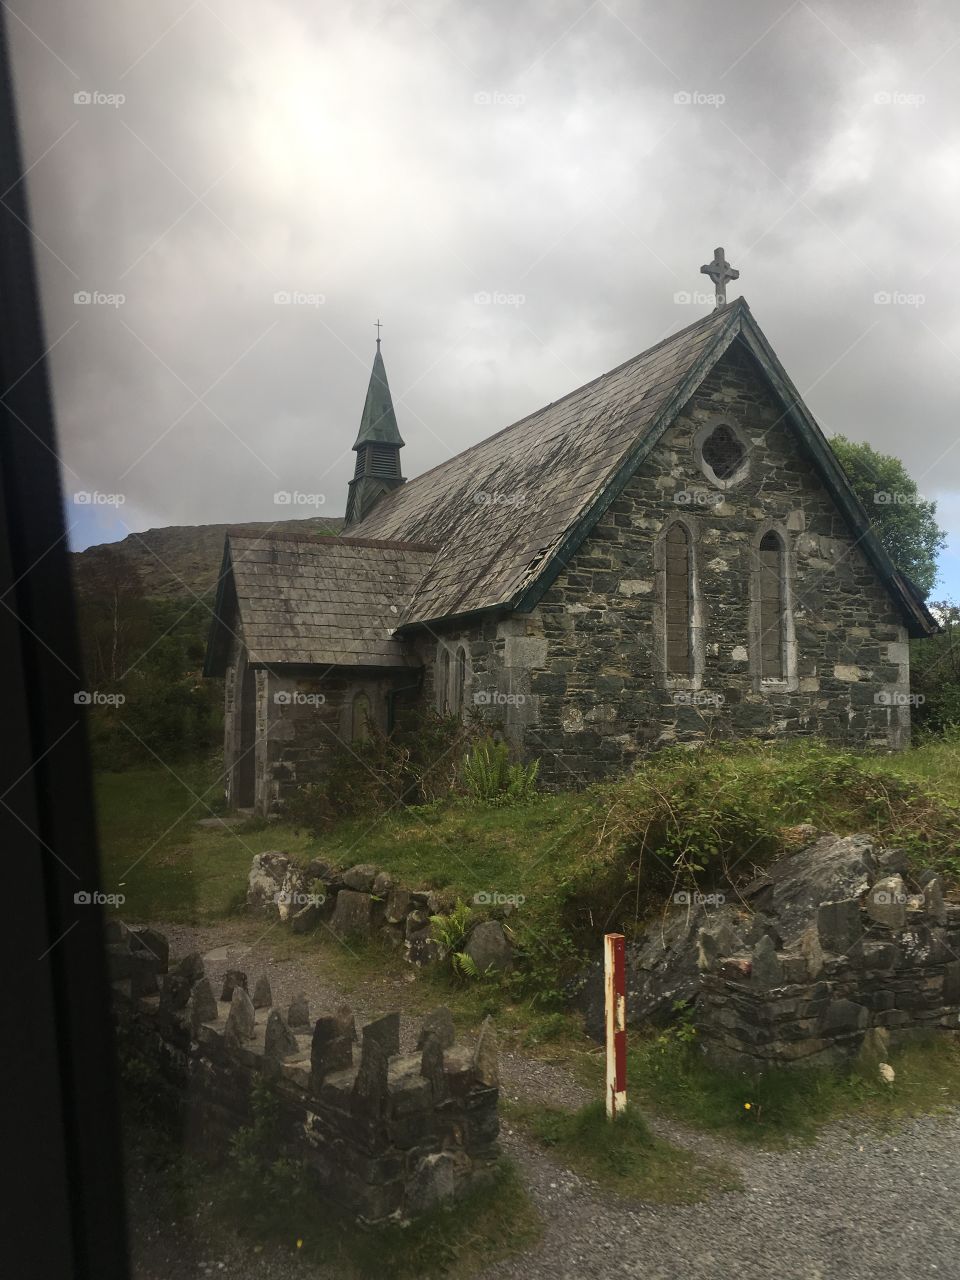 Church located in western Ireland 